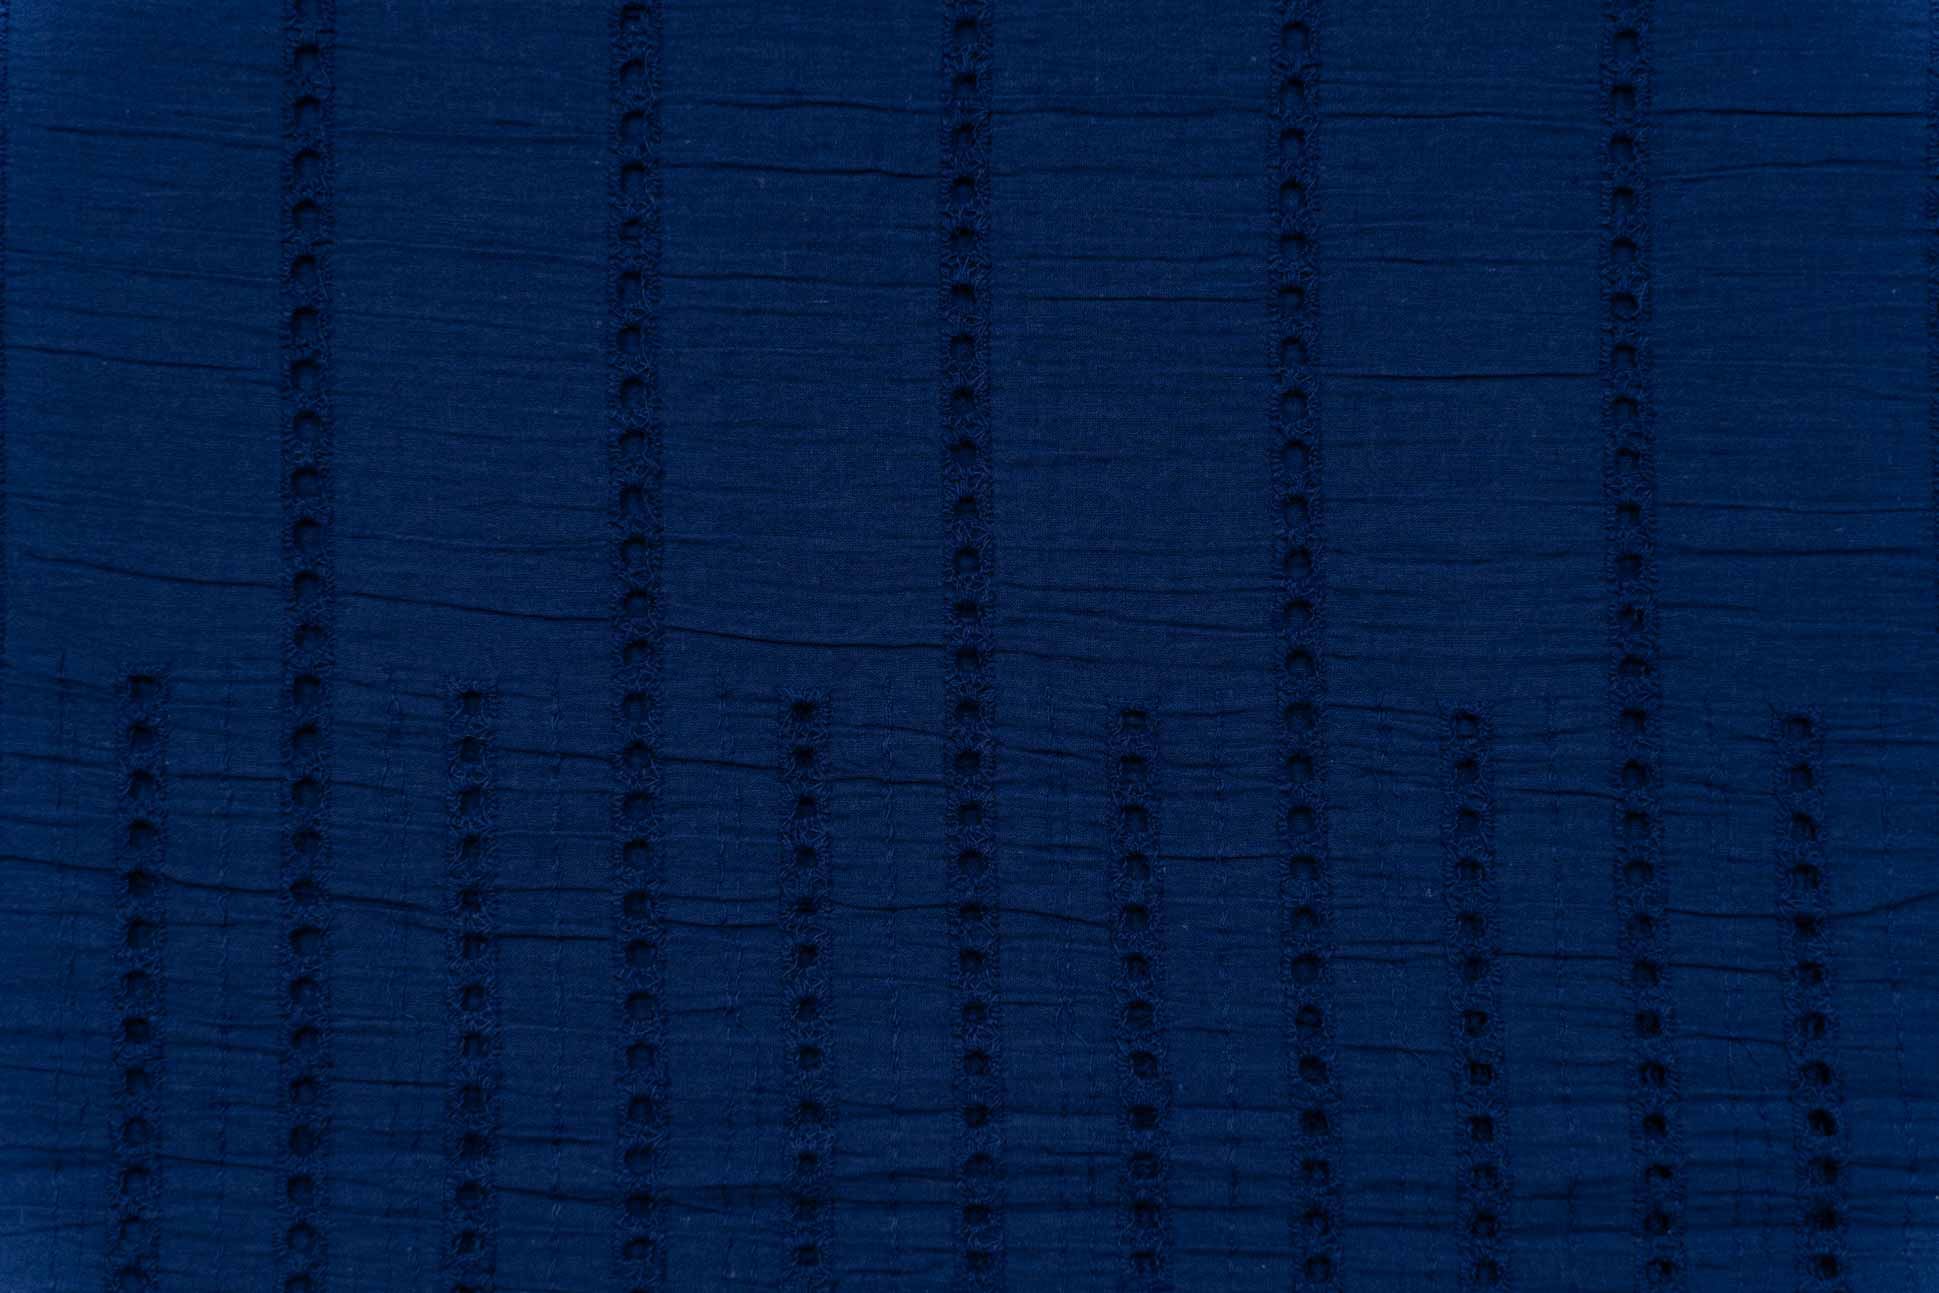 Midnight Blue Chikankari Embroidered Fabric